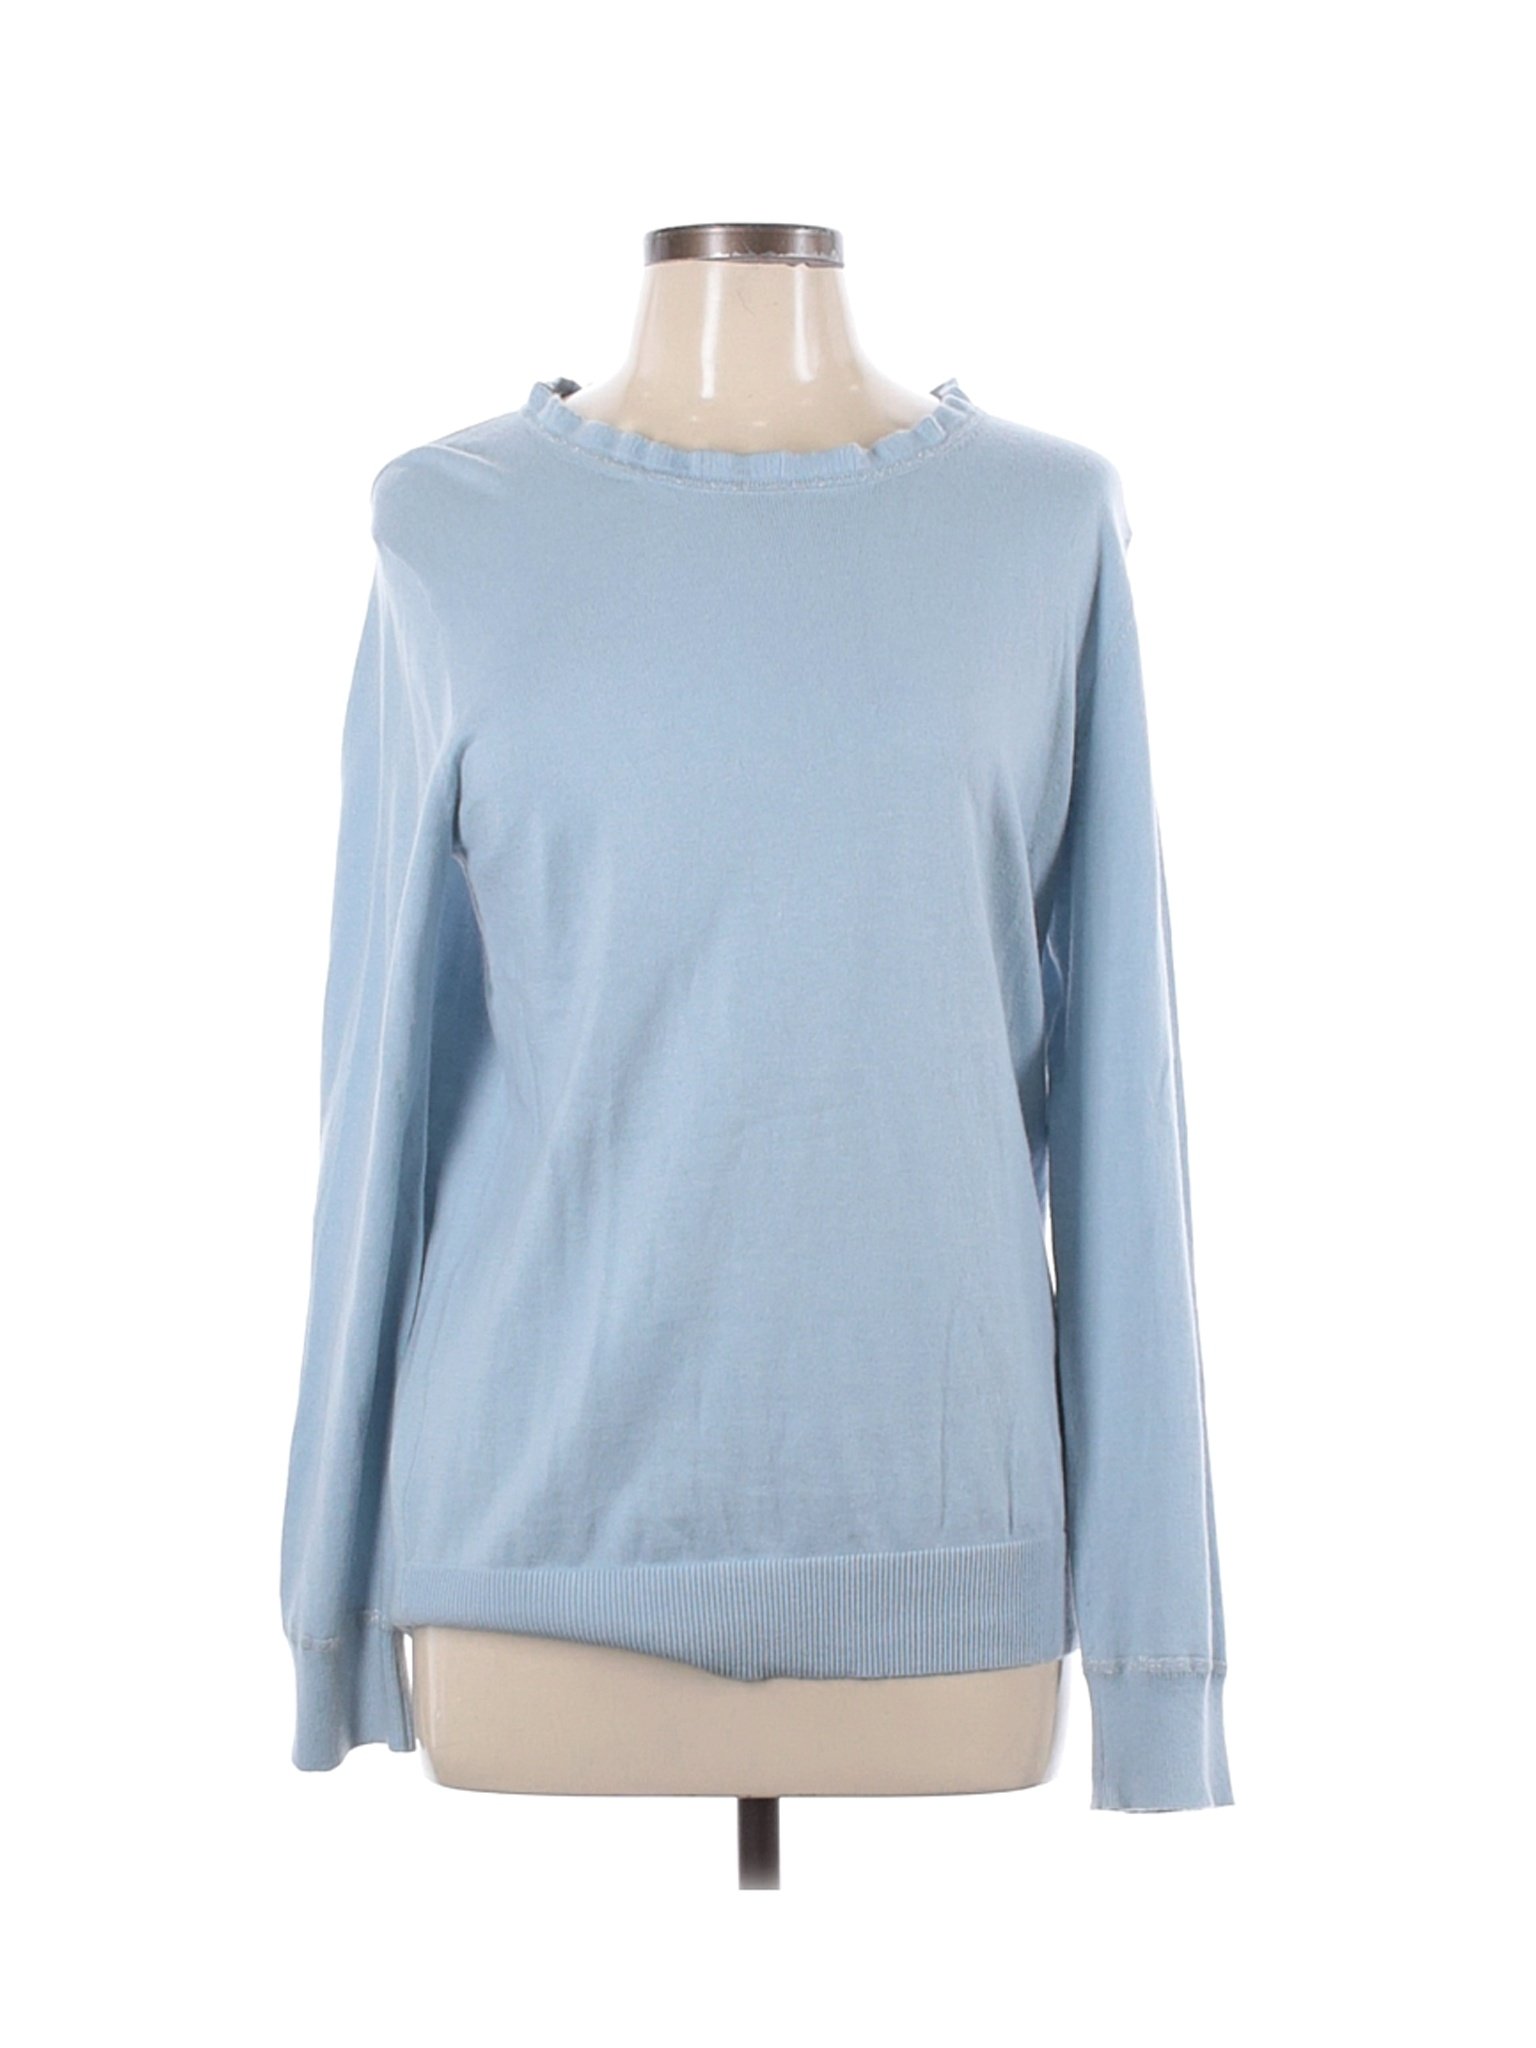 Banana Republic Factory Store Women Blue Pullover Sweater L | eBay